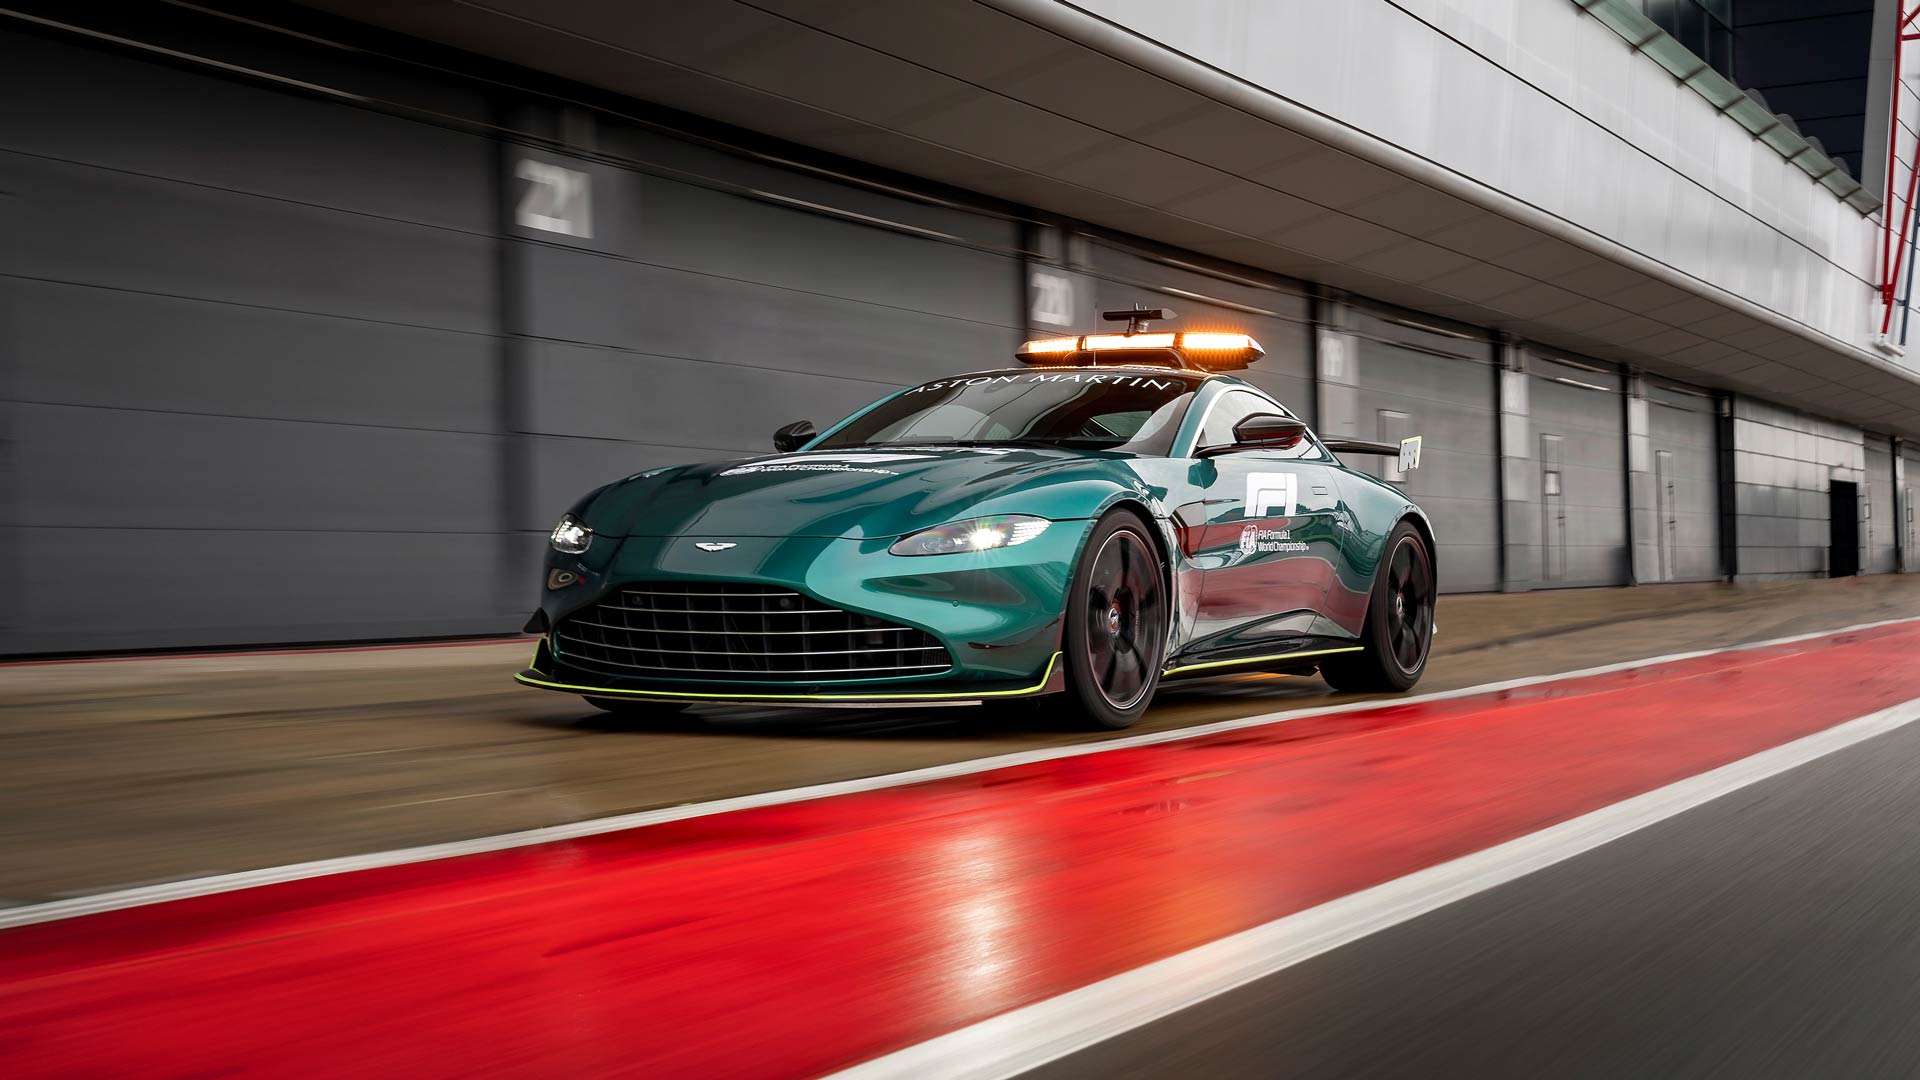 H Aston Martin Vantage γίνεται το αυτοκίνητο ασφαλείας στη Φόρμουλα 1